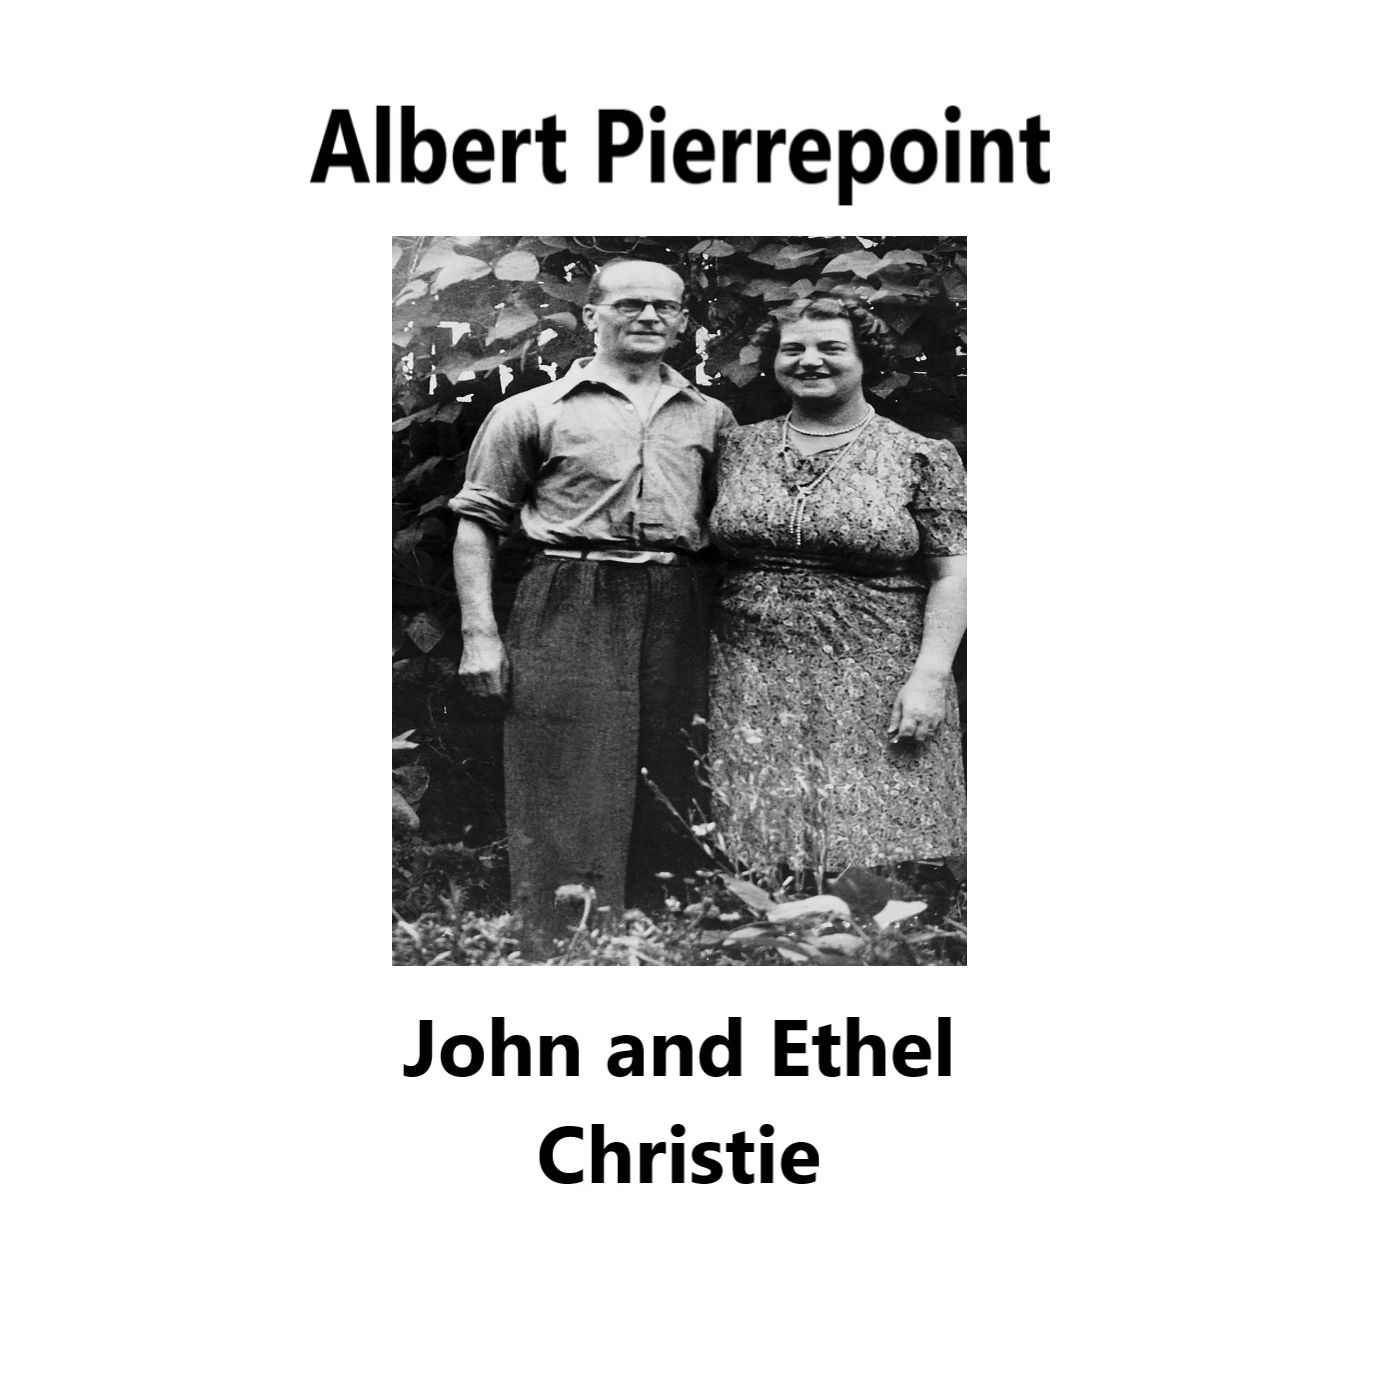 Albert Pierrepoint: John Christie, and the murder of Ethel Christie